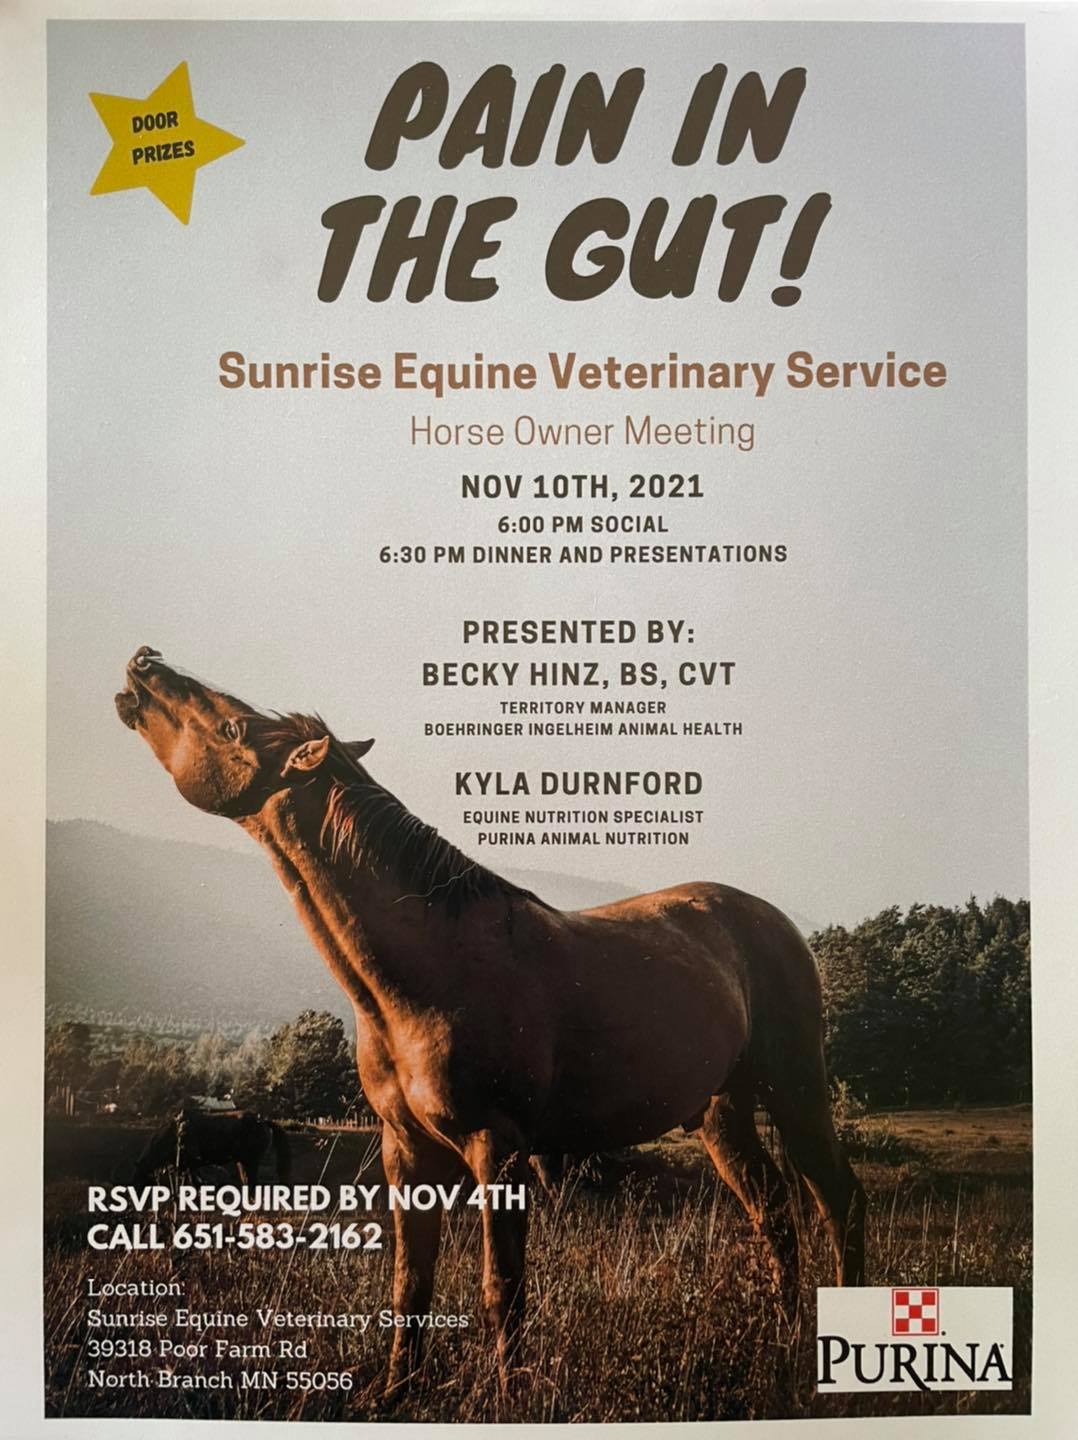 Sunrise Equine Veterinary Services 39318 Poor Farm Rd, North Branch Minnesota 55056